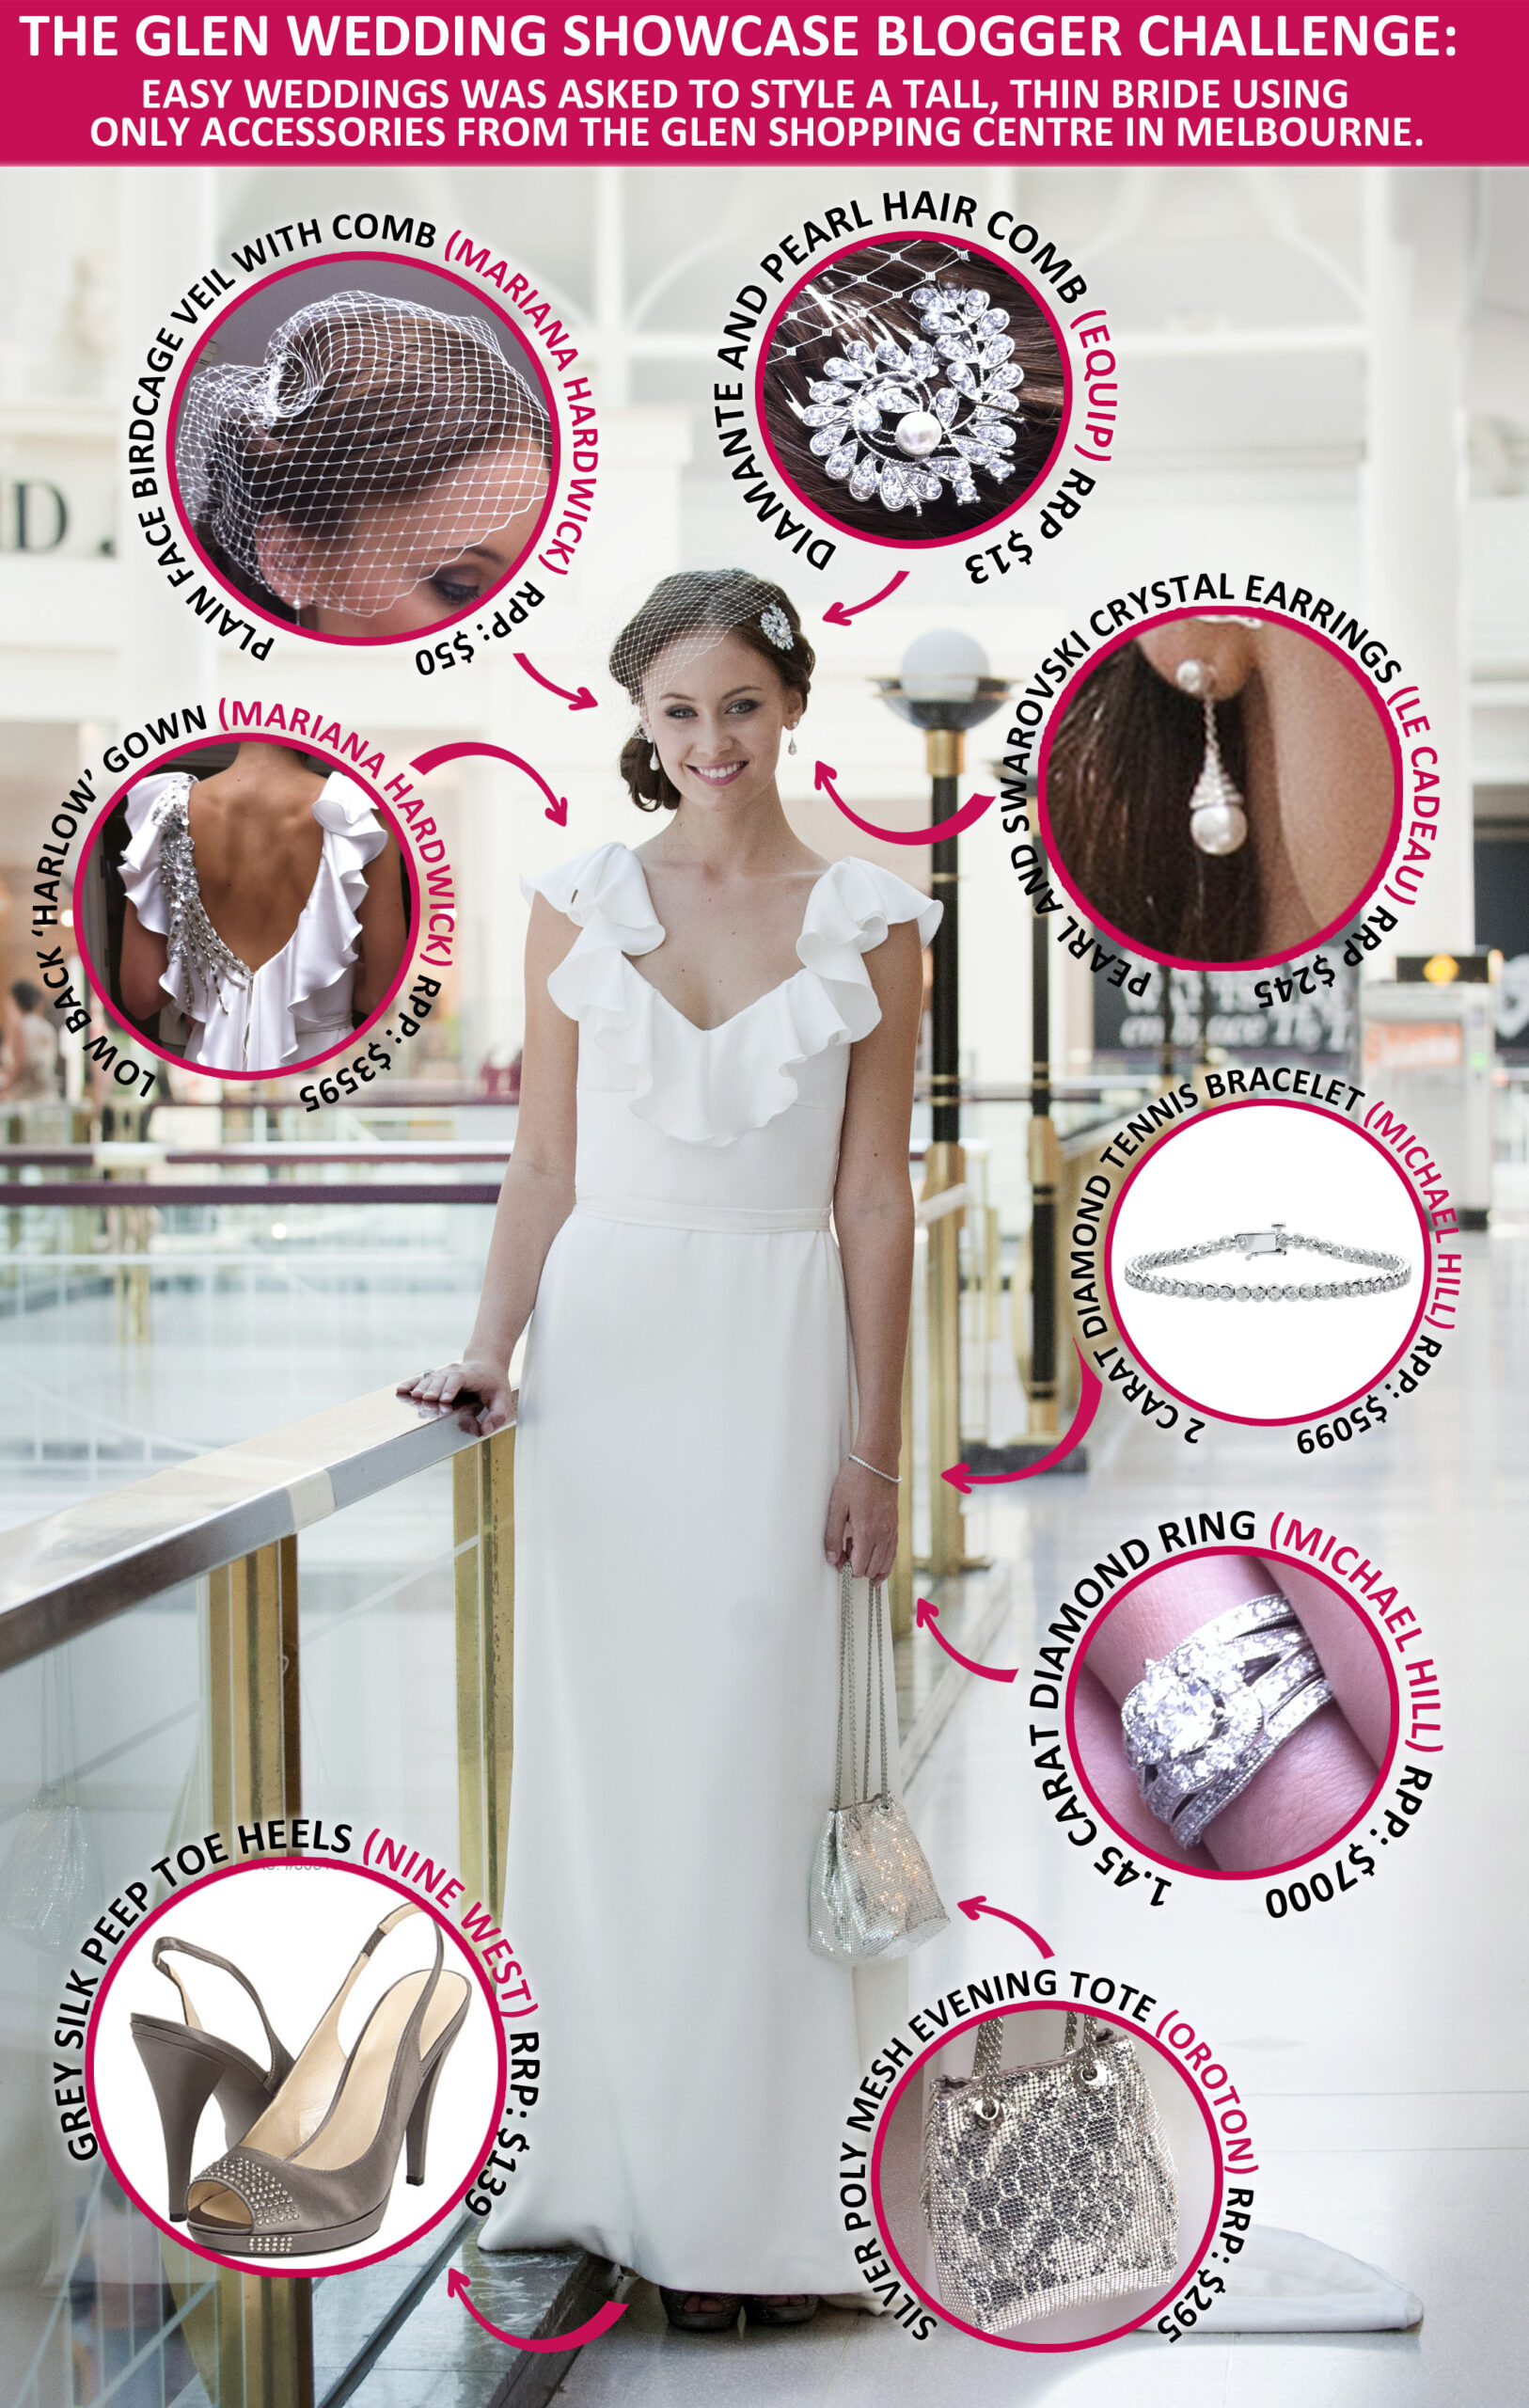 The Glen showcase - Easy Weddings' styles a Mariana Hardwick wedding gown